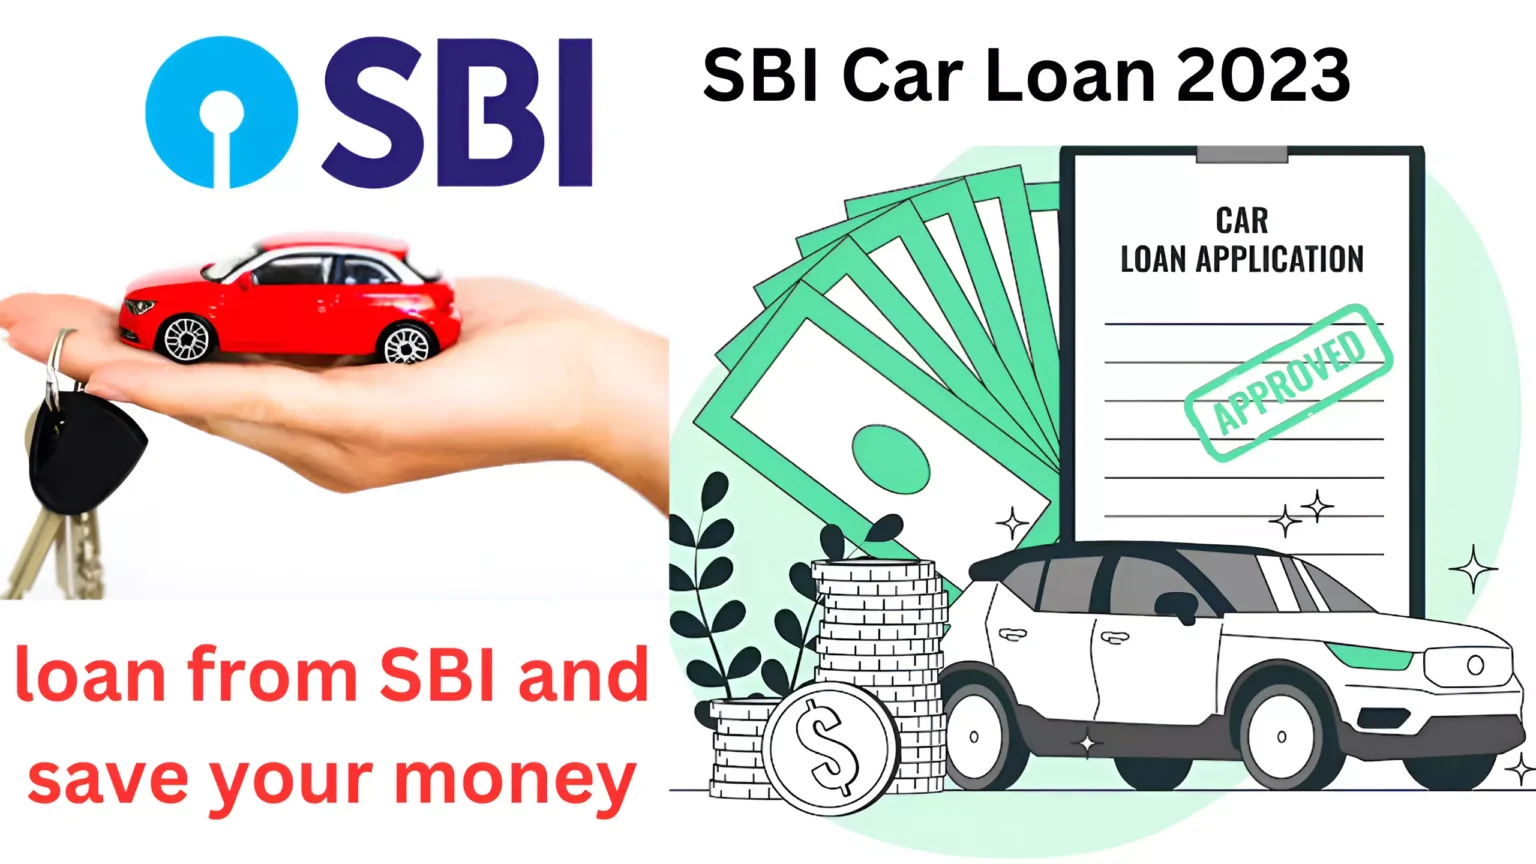 SBI Car Loan 2023